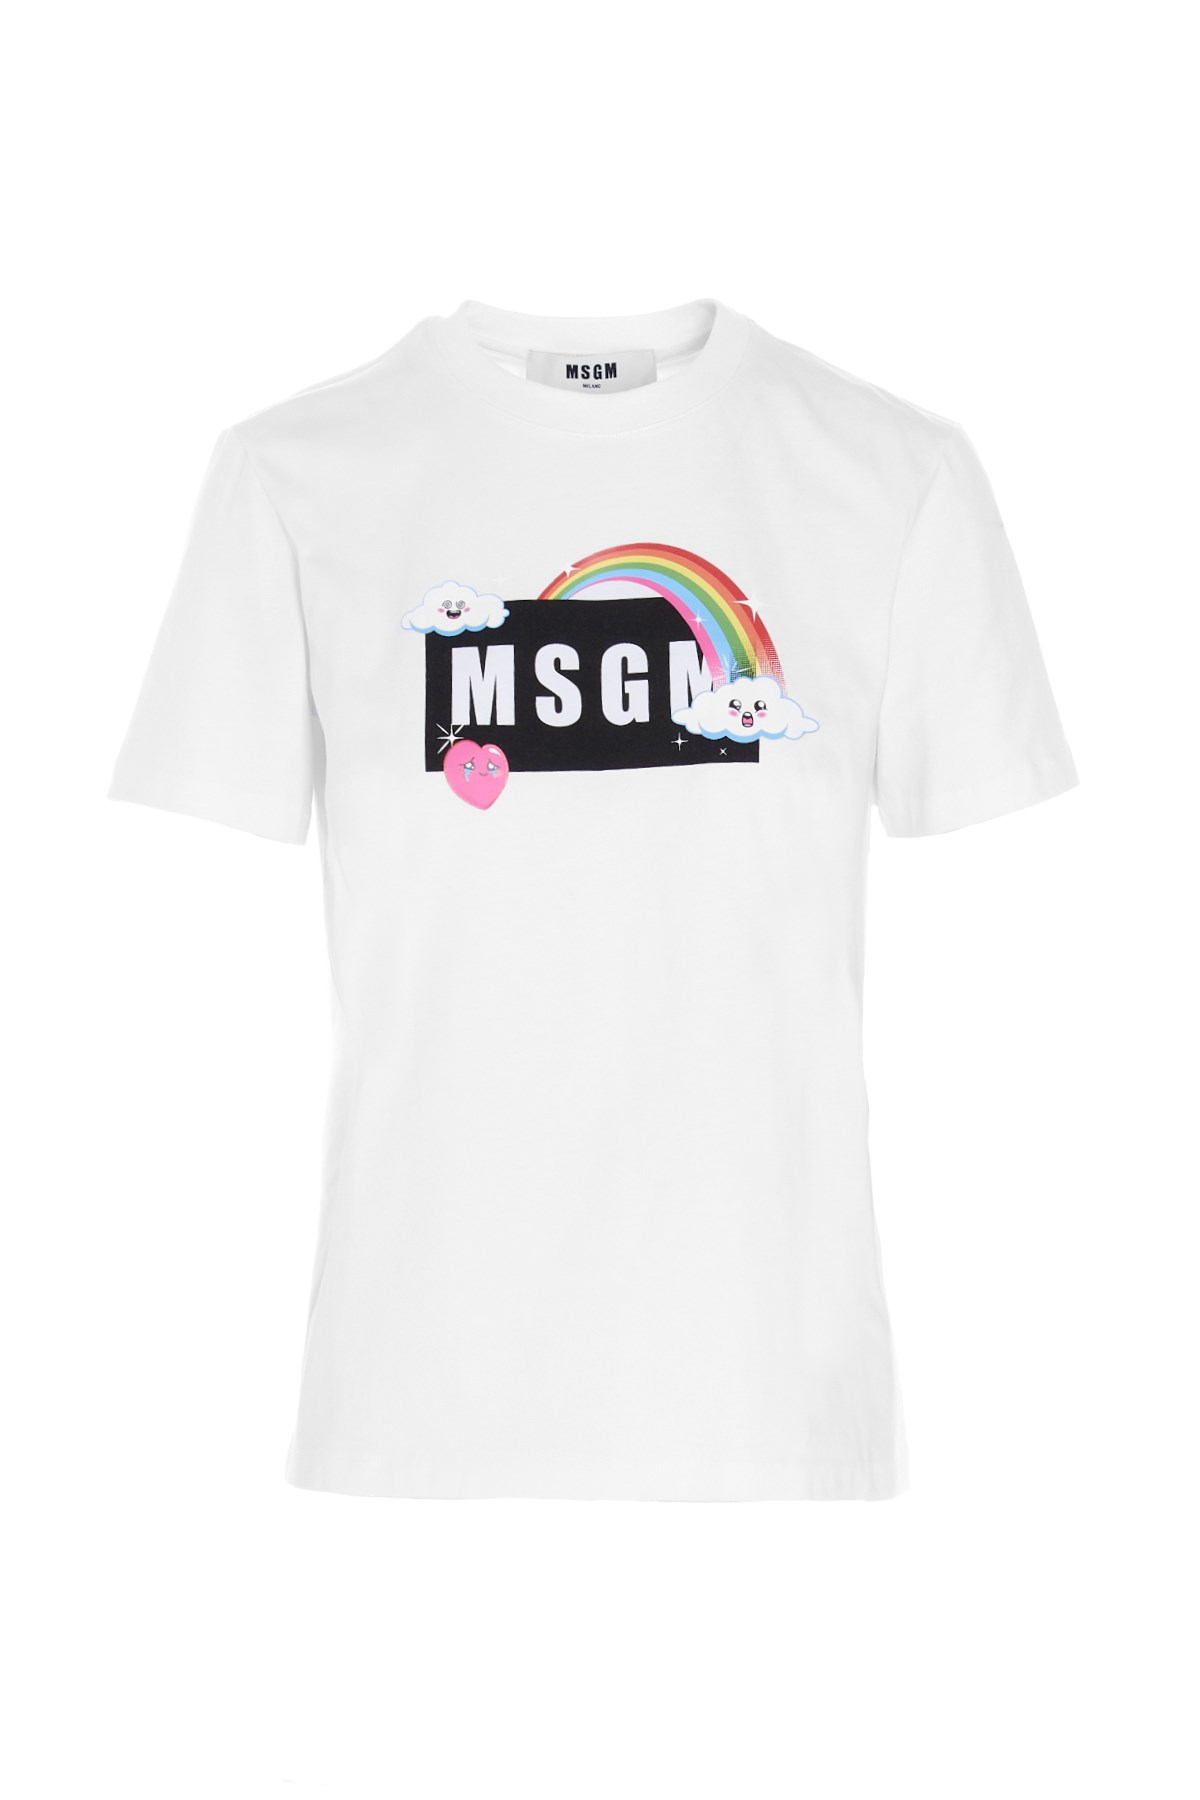 MSGM ‘Rainbow’ Logo Print T-Shirt'